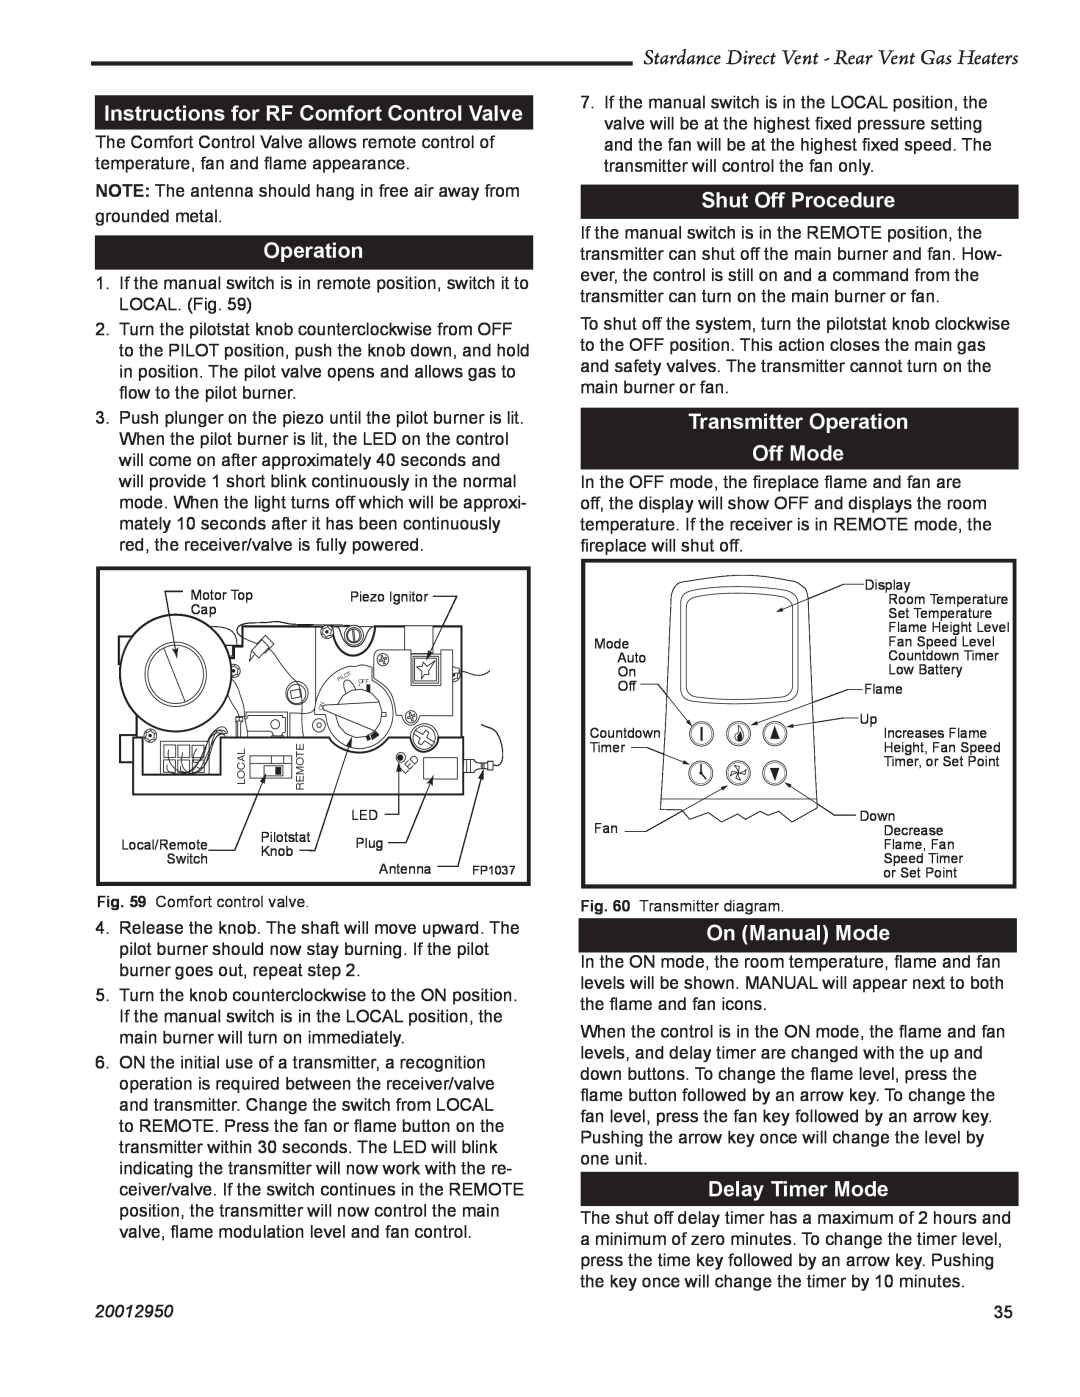 Vermont Casting SDDVRCBD, SDDVREB Instructions for RF Comfort Control Valve, Operation, Shut Off Procedure, On Manual Mode 